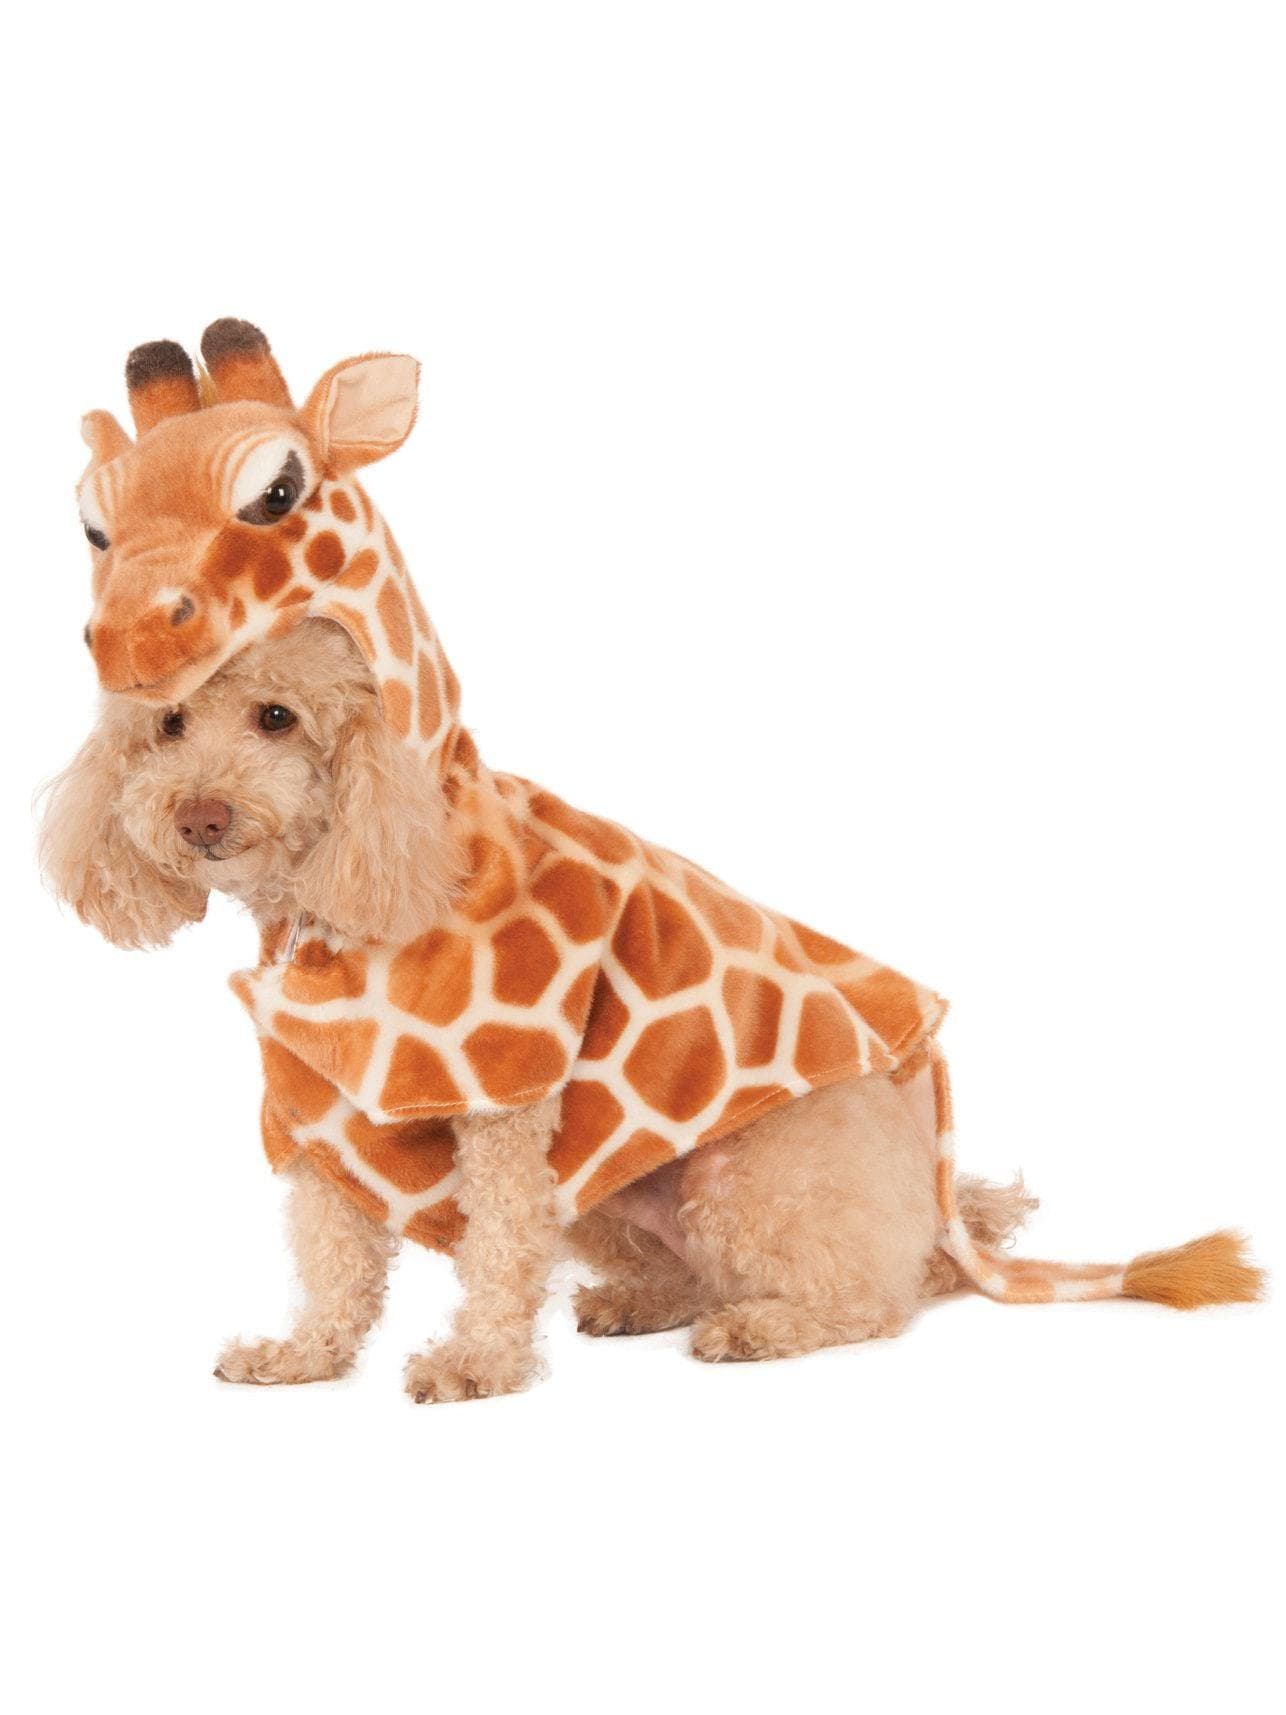 Giraffe Pet Costume - costumes.com